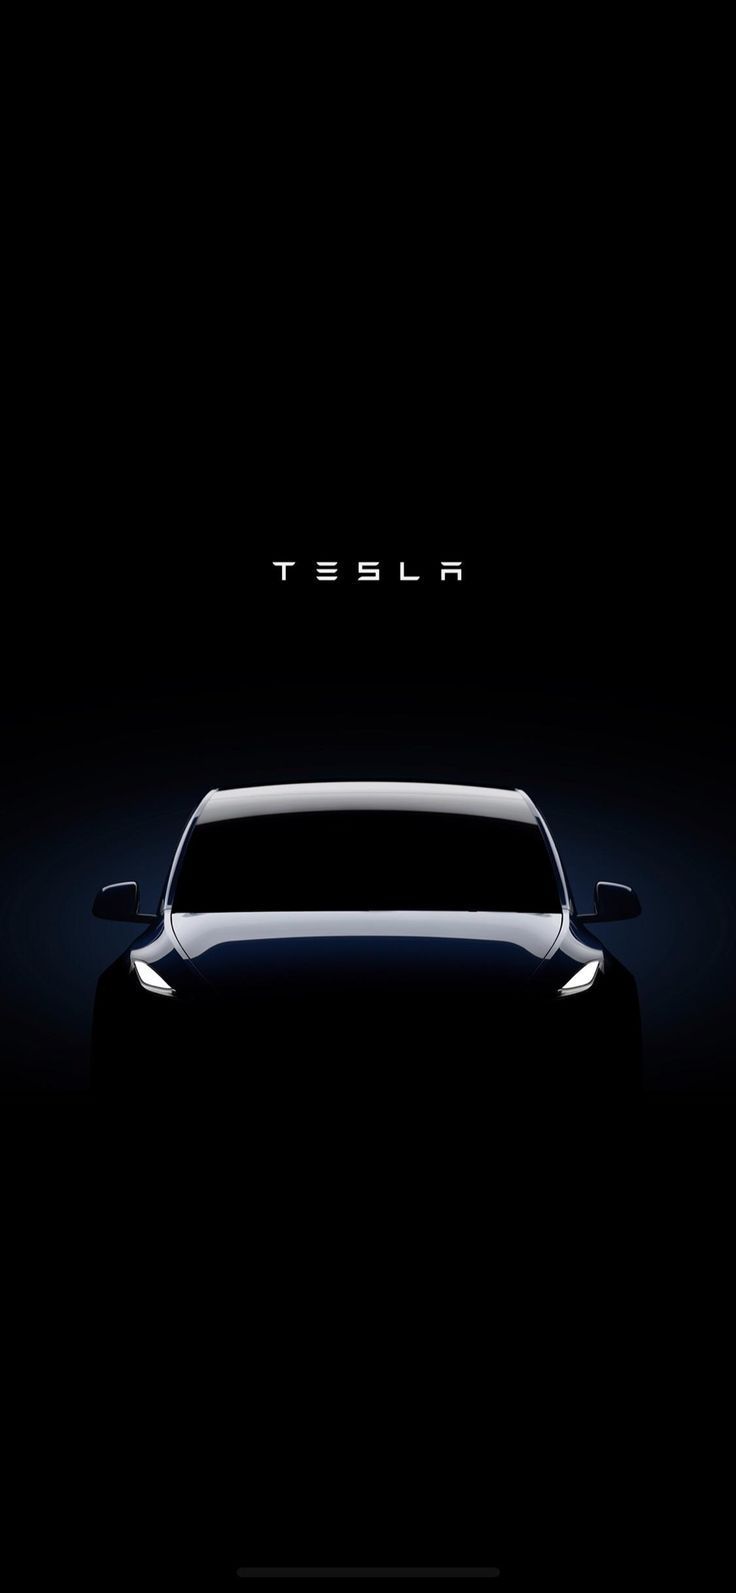 Tesla Model X Iphone Wallpapers